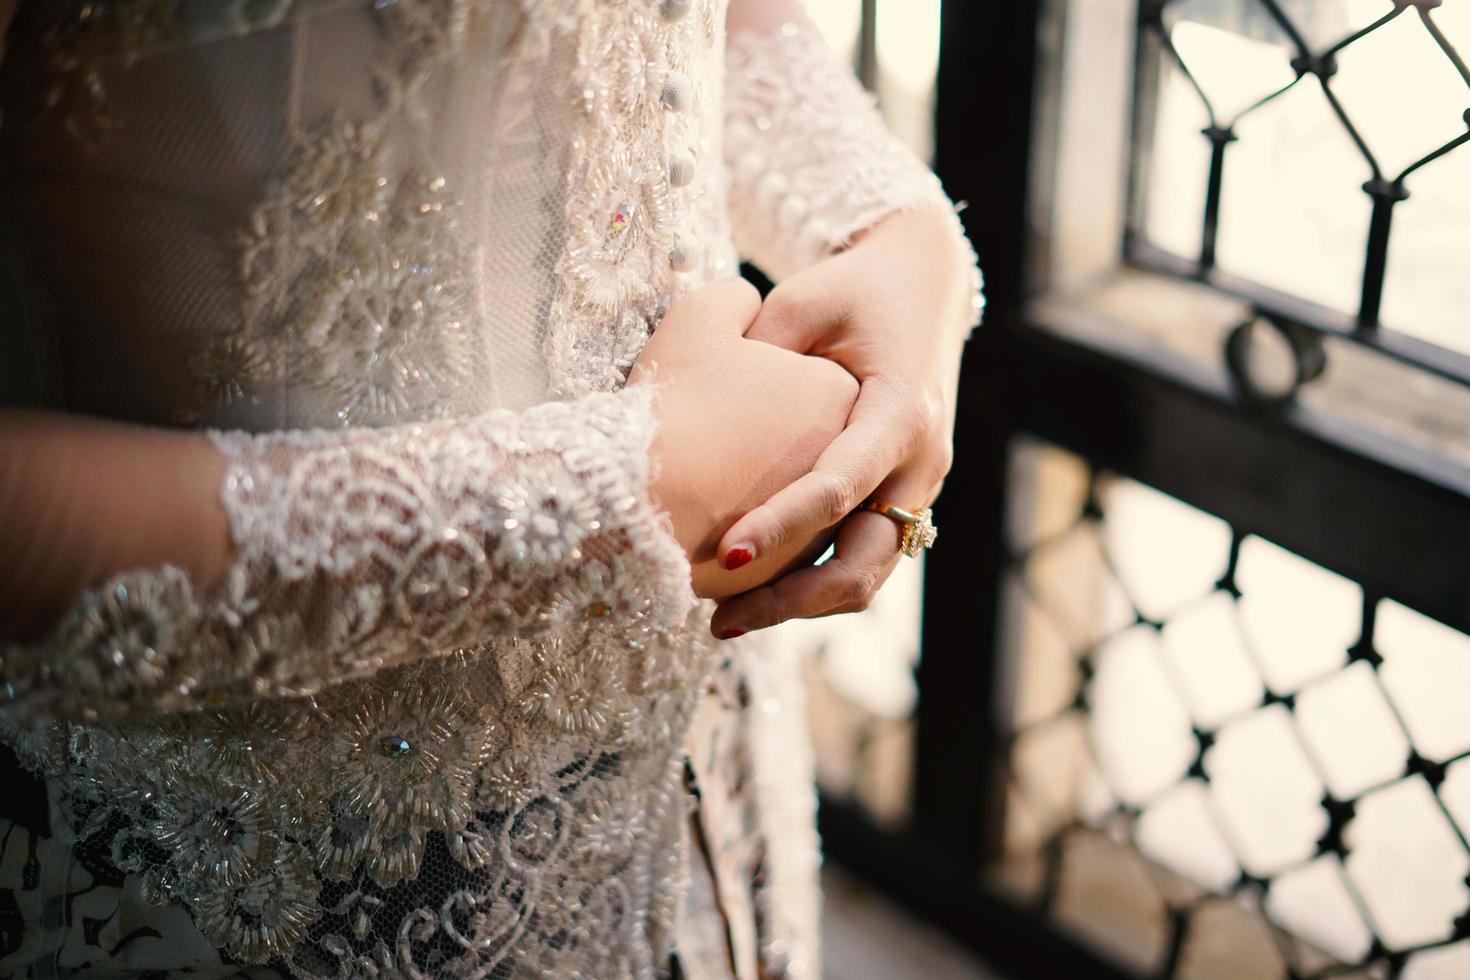 Luxurious wedding dress worn in ceremony photo